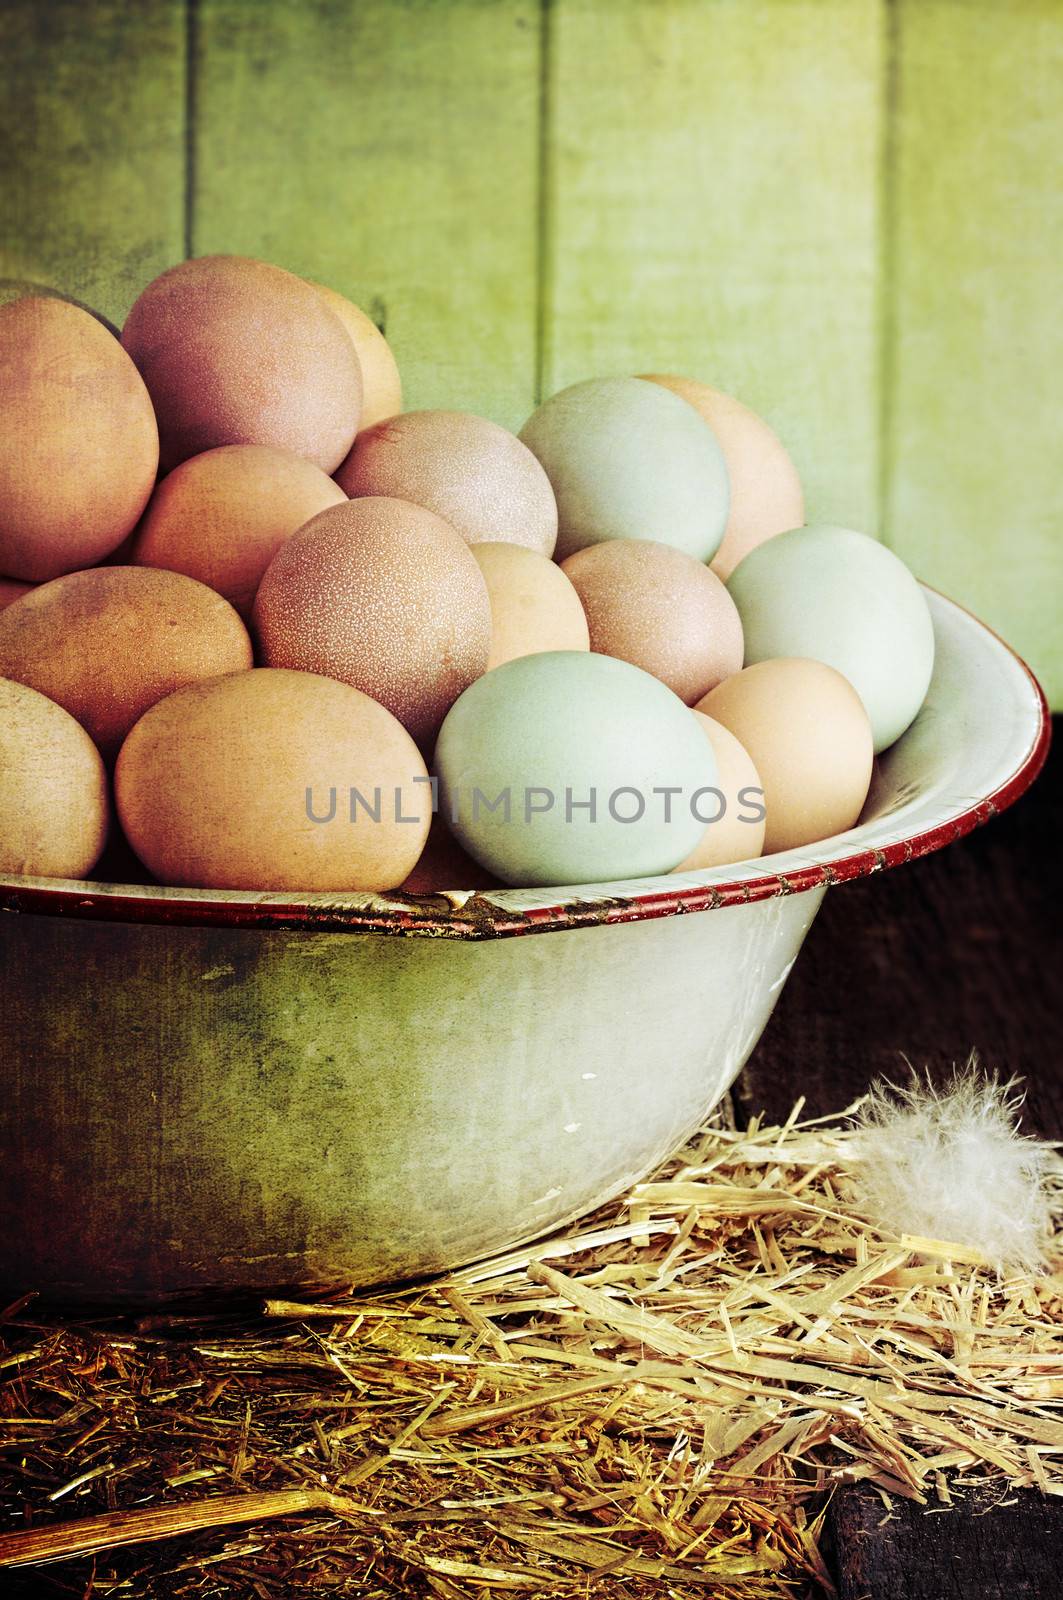 Rustic Farm Raised Eggs by StephanieFrey